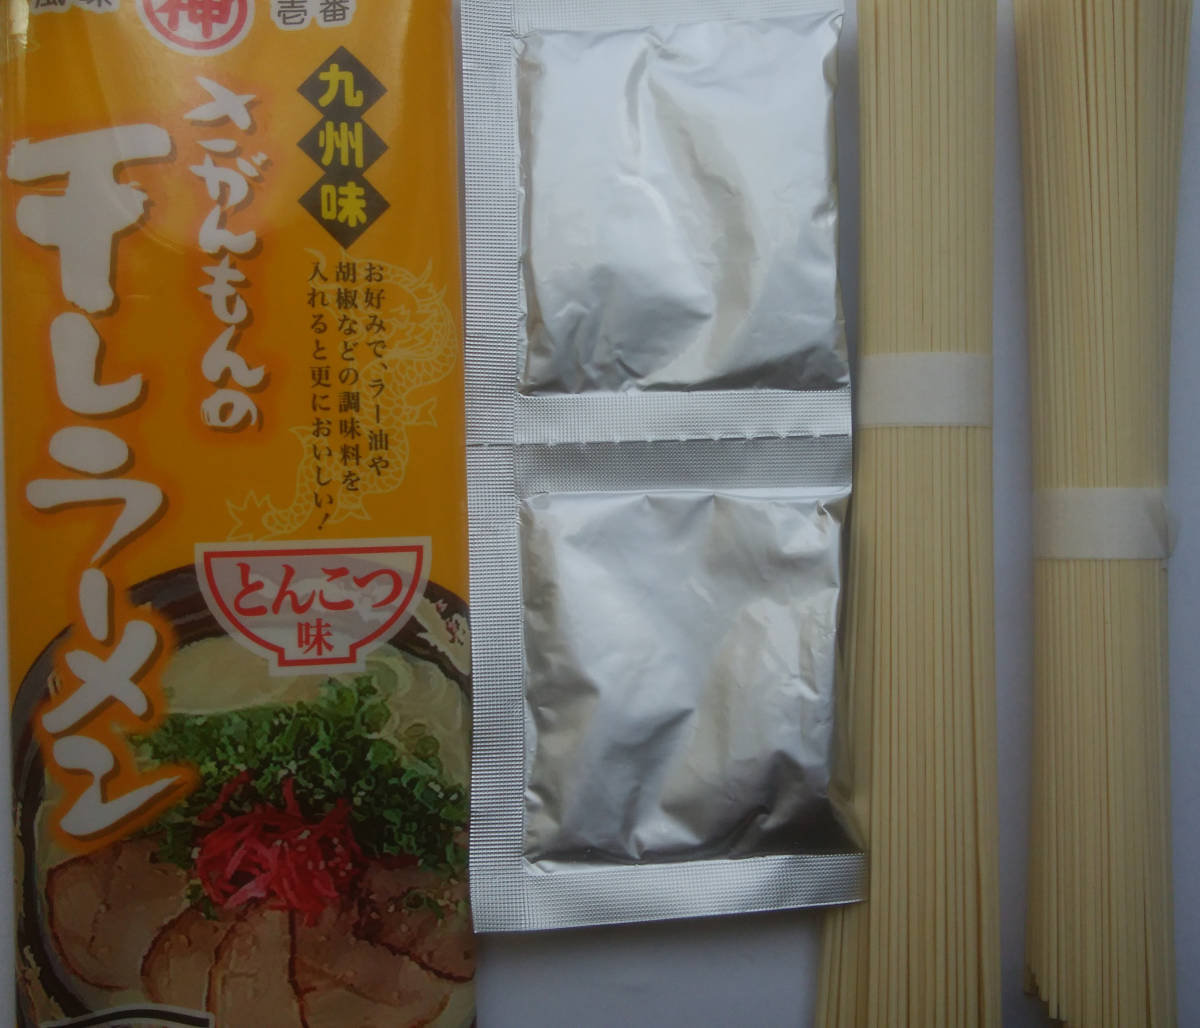  large Special ultra rare popular market - too much . turns not commodity. pig . ramen Kyushu taste ...... dried ramen .... taste recommendation ..427300